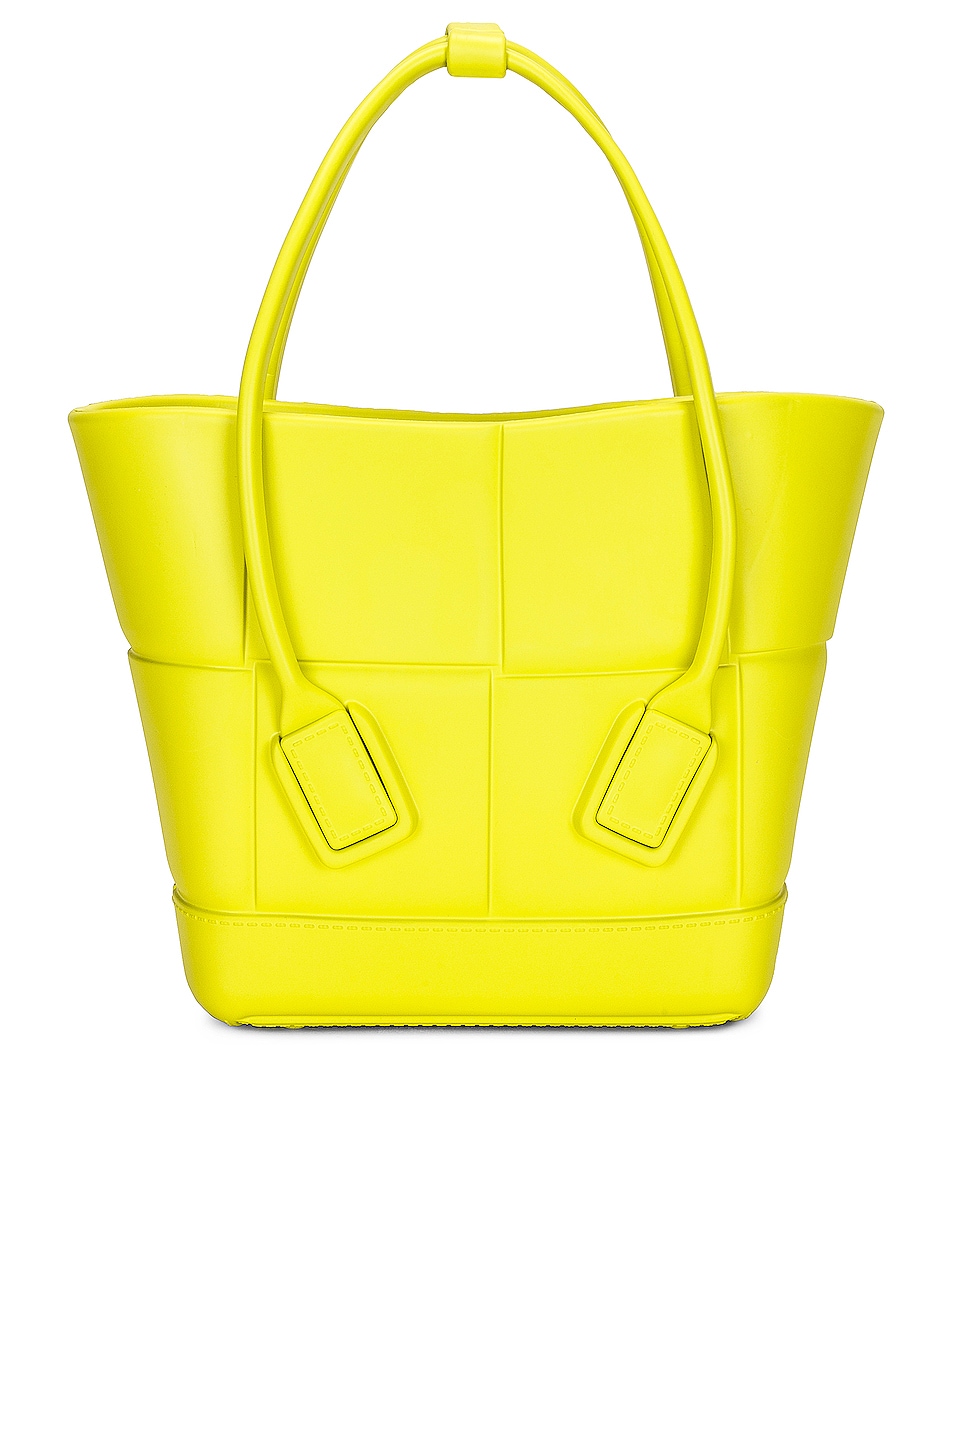 Mini Arco Shopping Tote Bag in Lemon